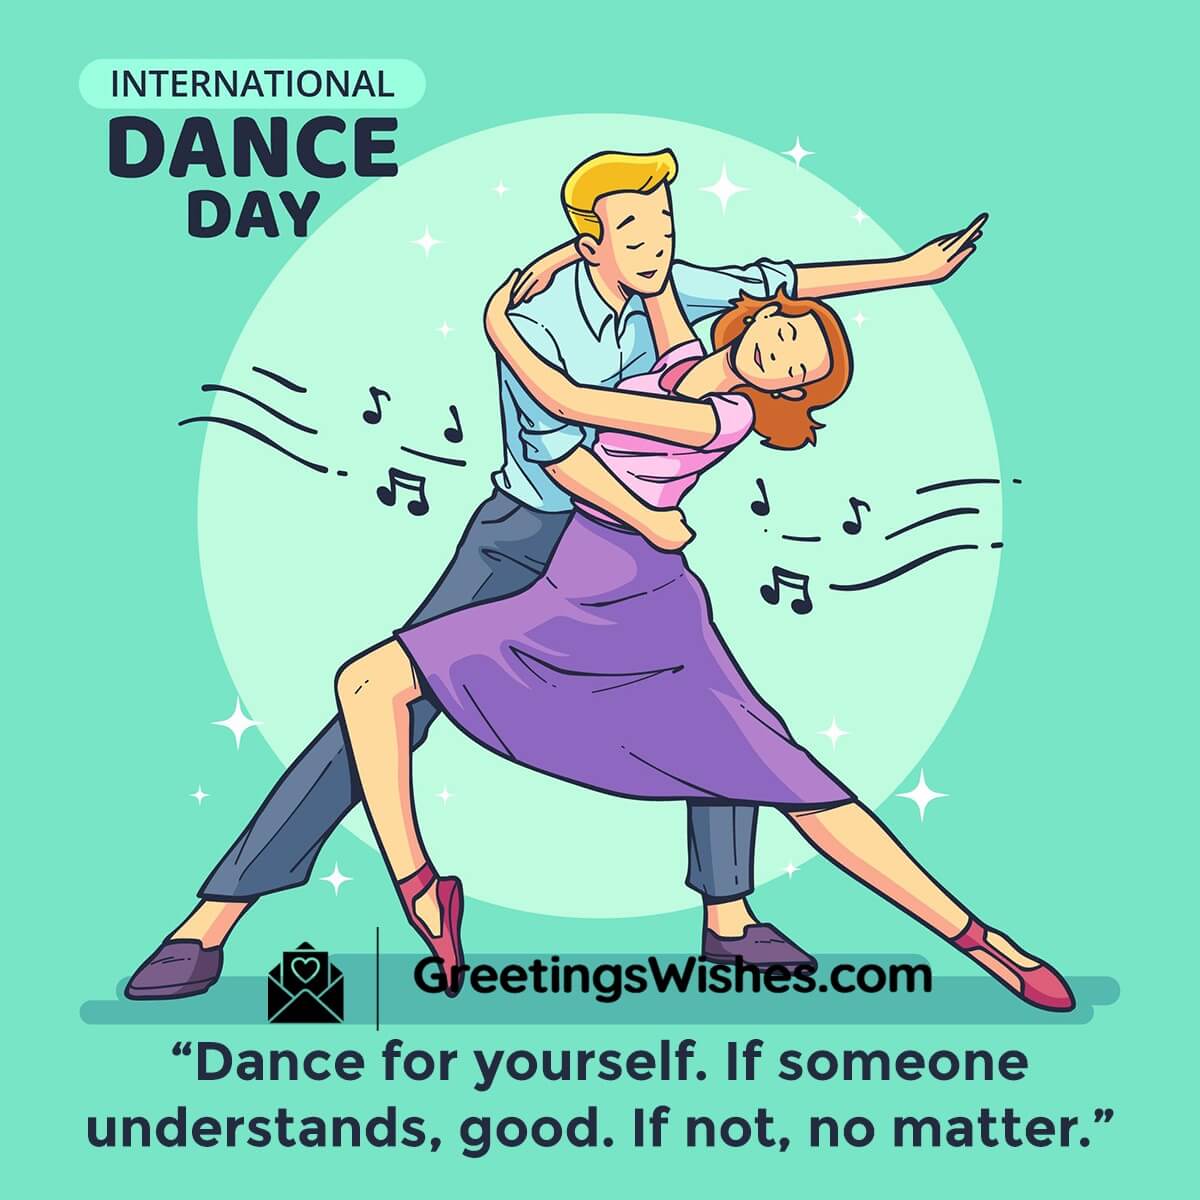 International Dance Day Message